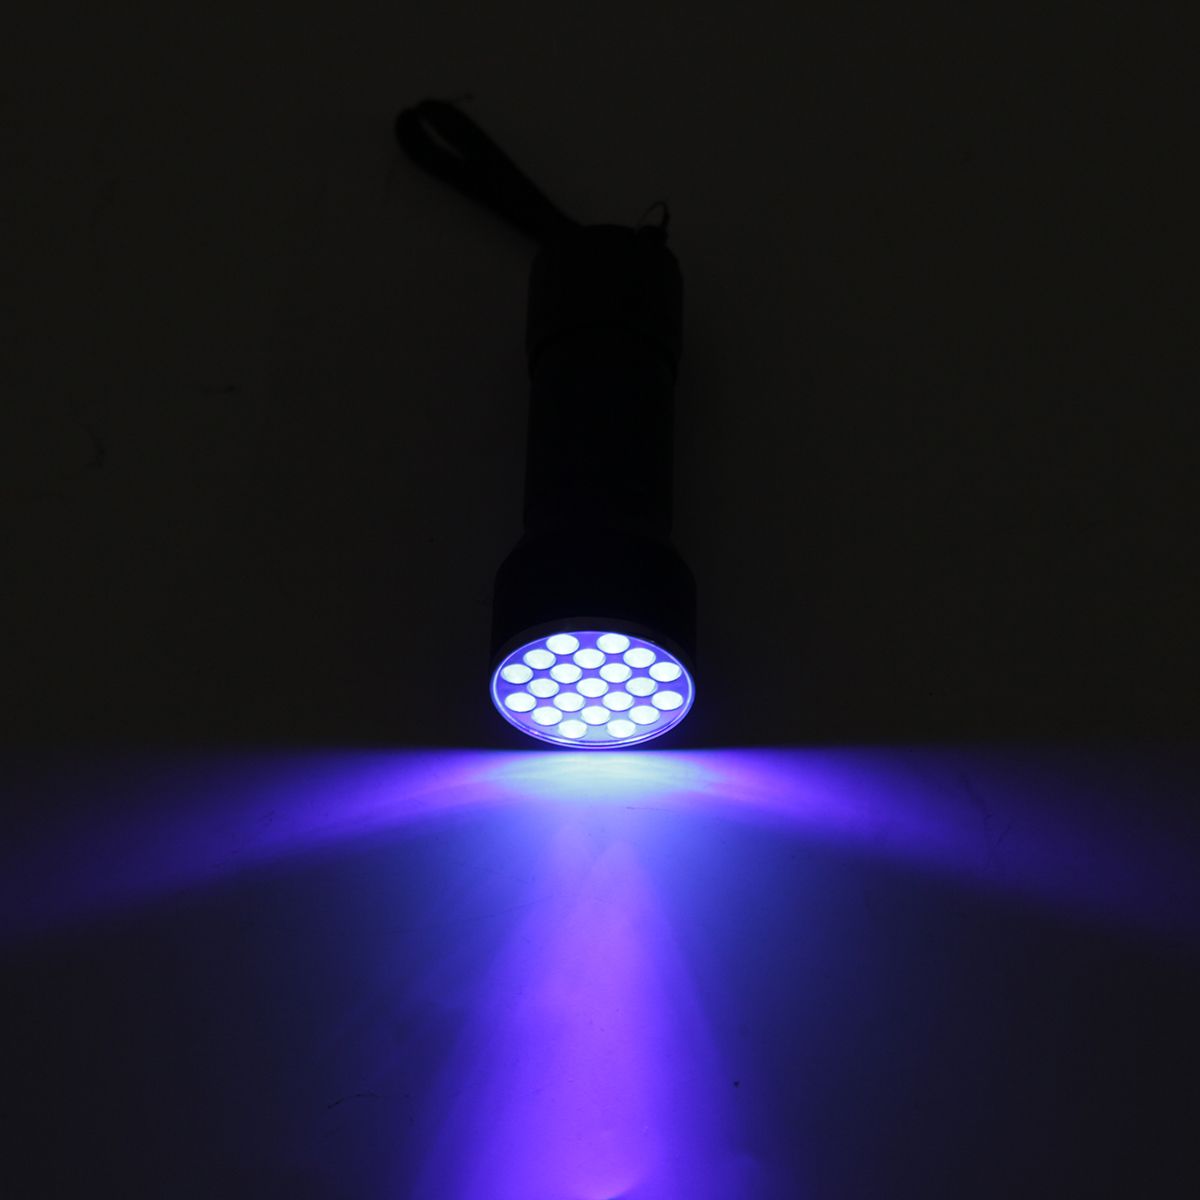 21-LEDs-uv395-Portable-Aluminum-UV-Ultra-Violet-Flashlight-Mini-Violet-Torch-Currency-Detector-Lamp--1631185